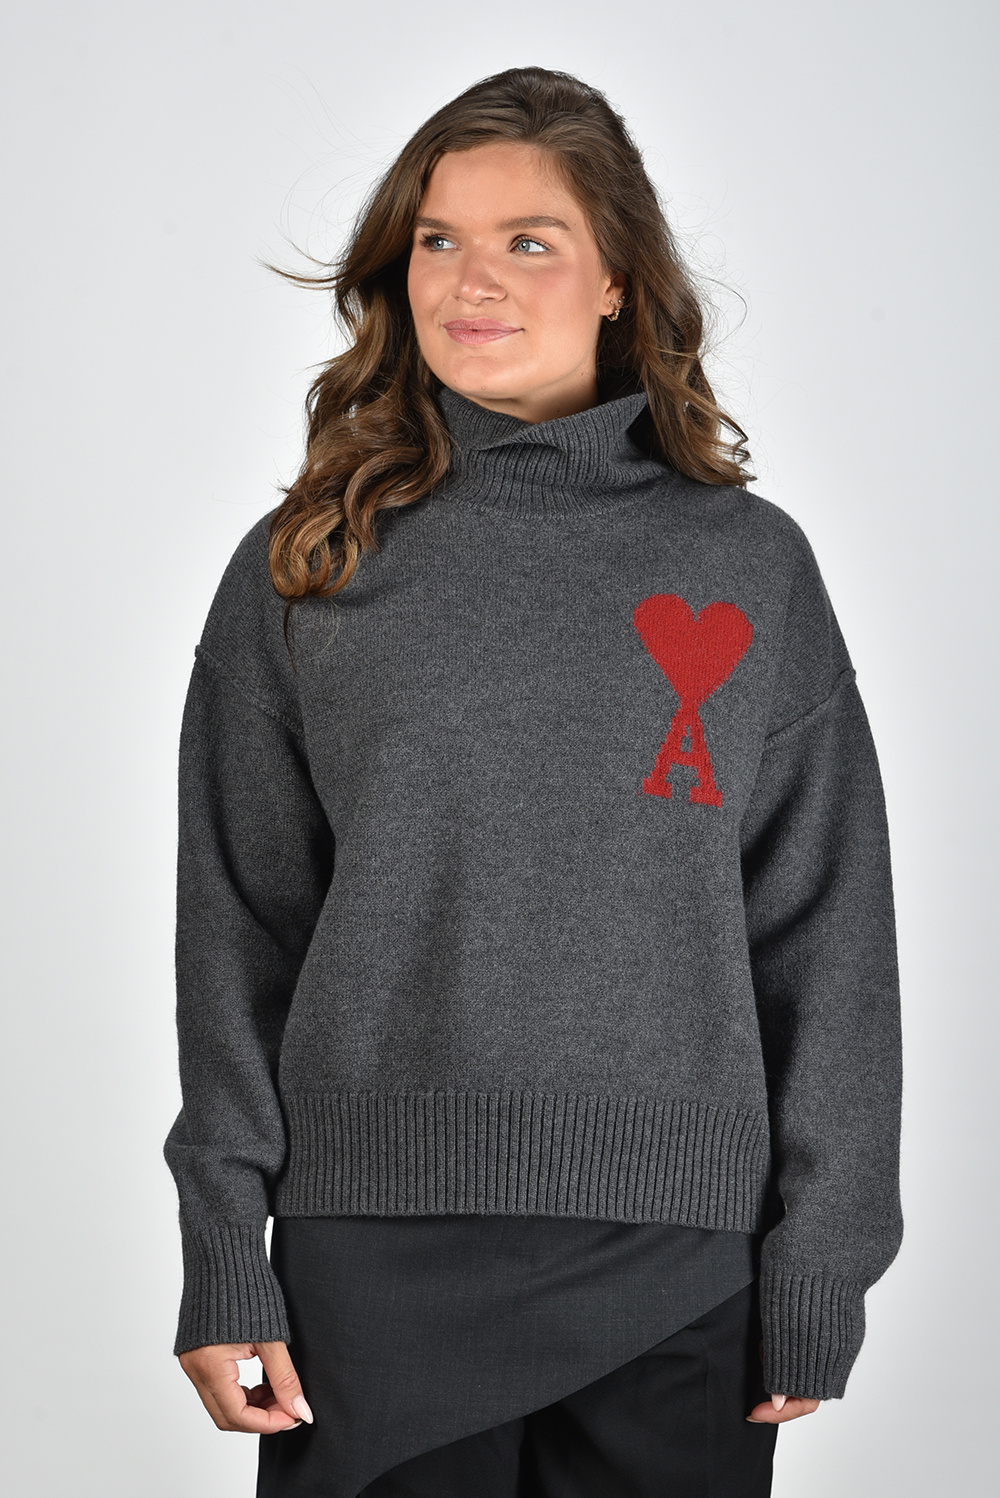 Ami Paris sweater Red ADC BFUKS406.018 heather grey/red - Marjon